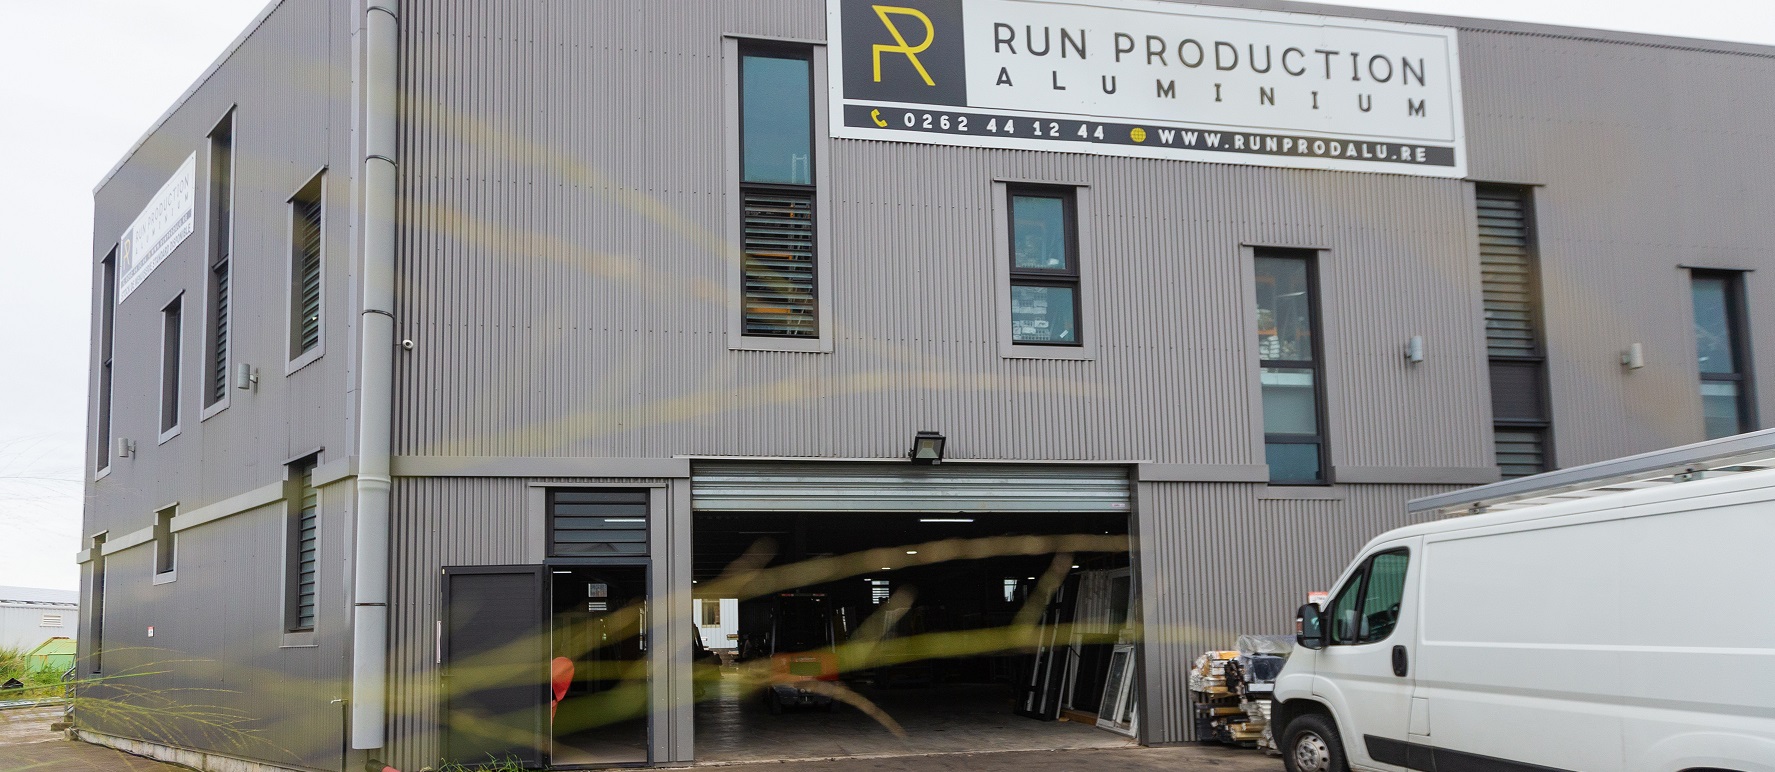 Run Production Alluminium